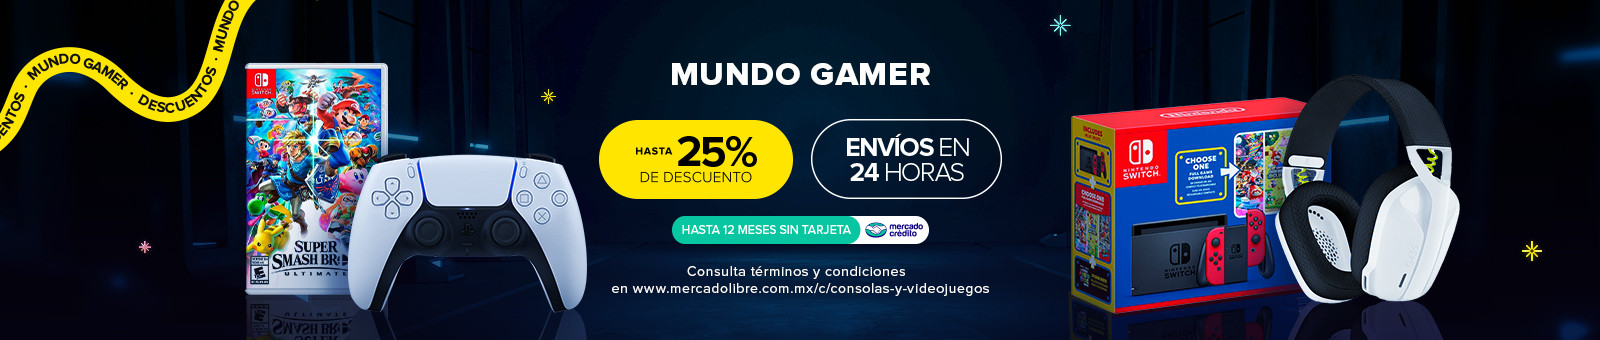 Mundo gamer